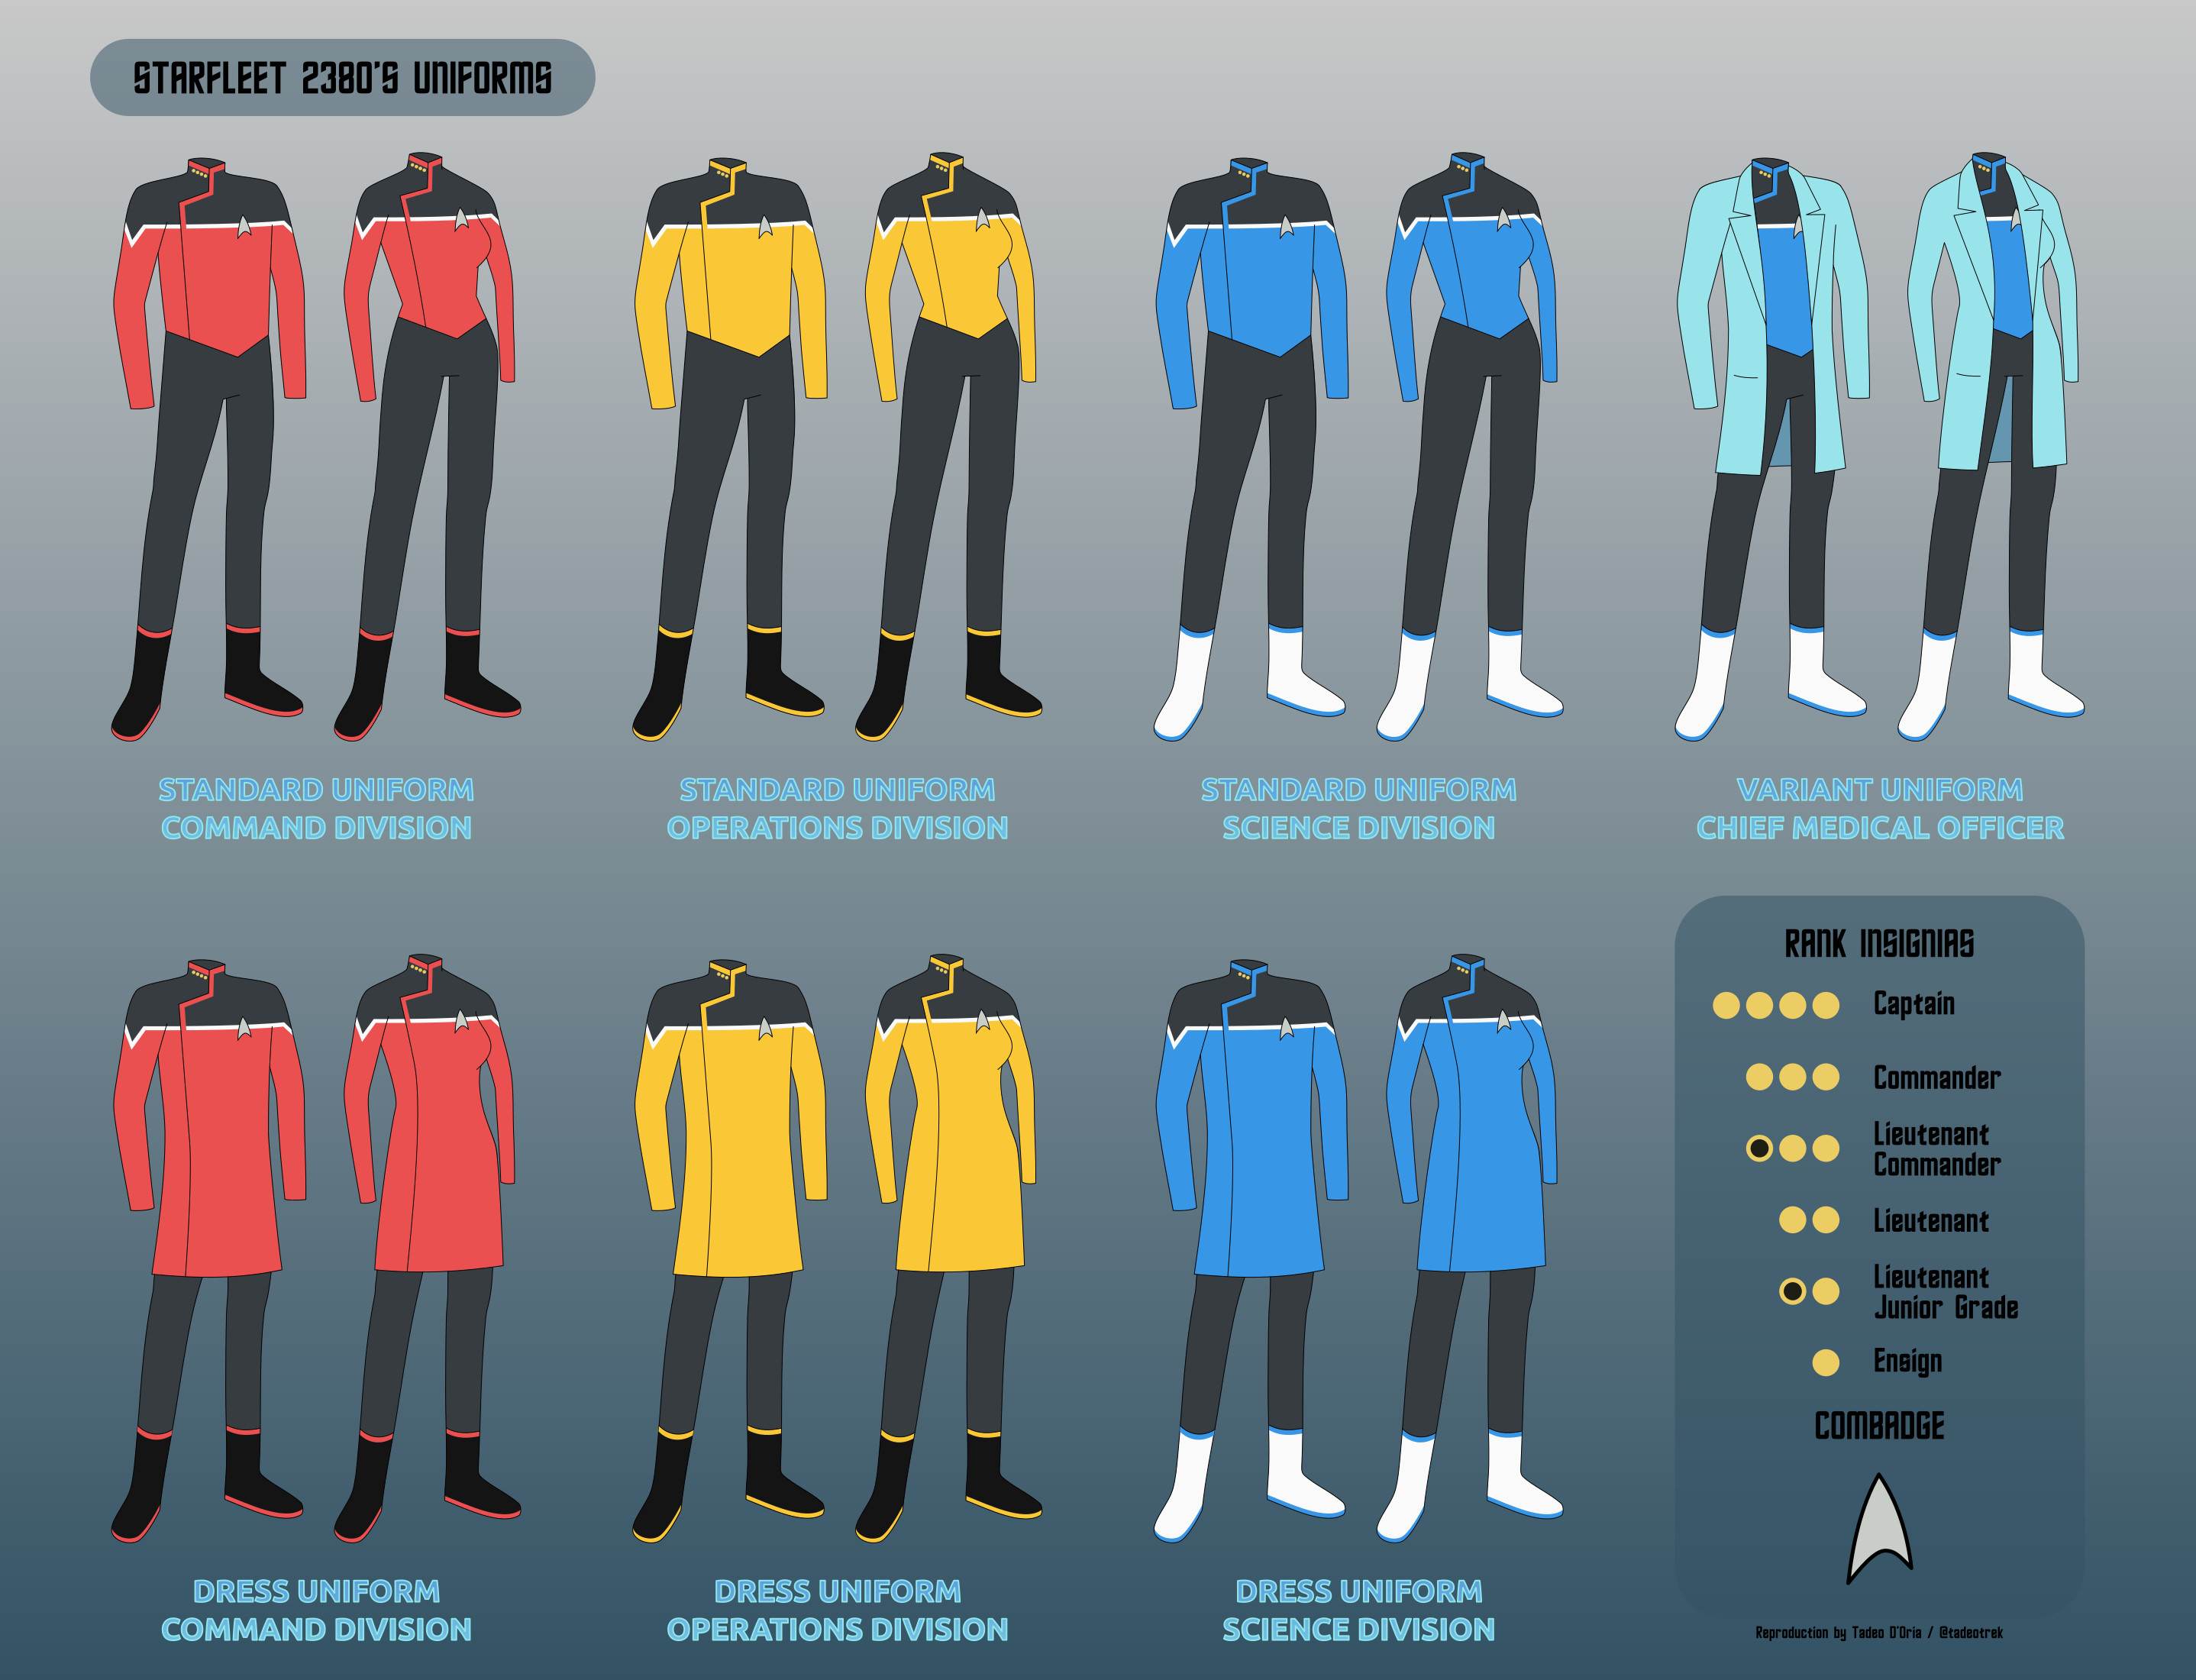 star trek shirt colors explained